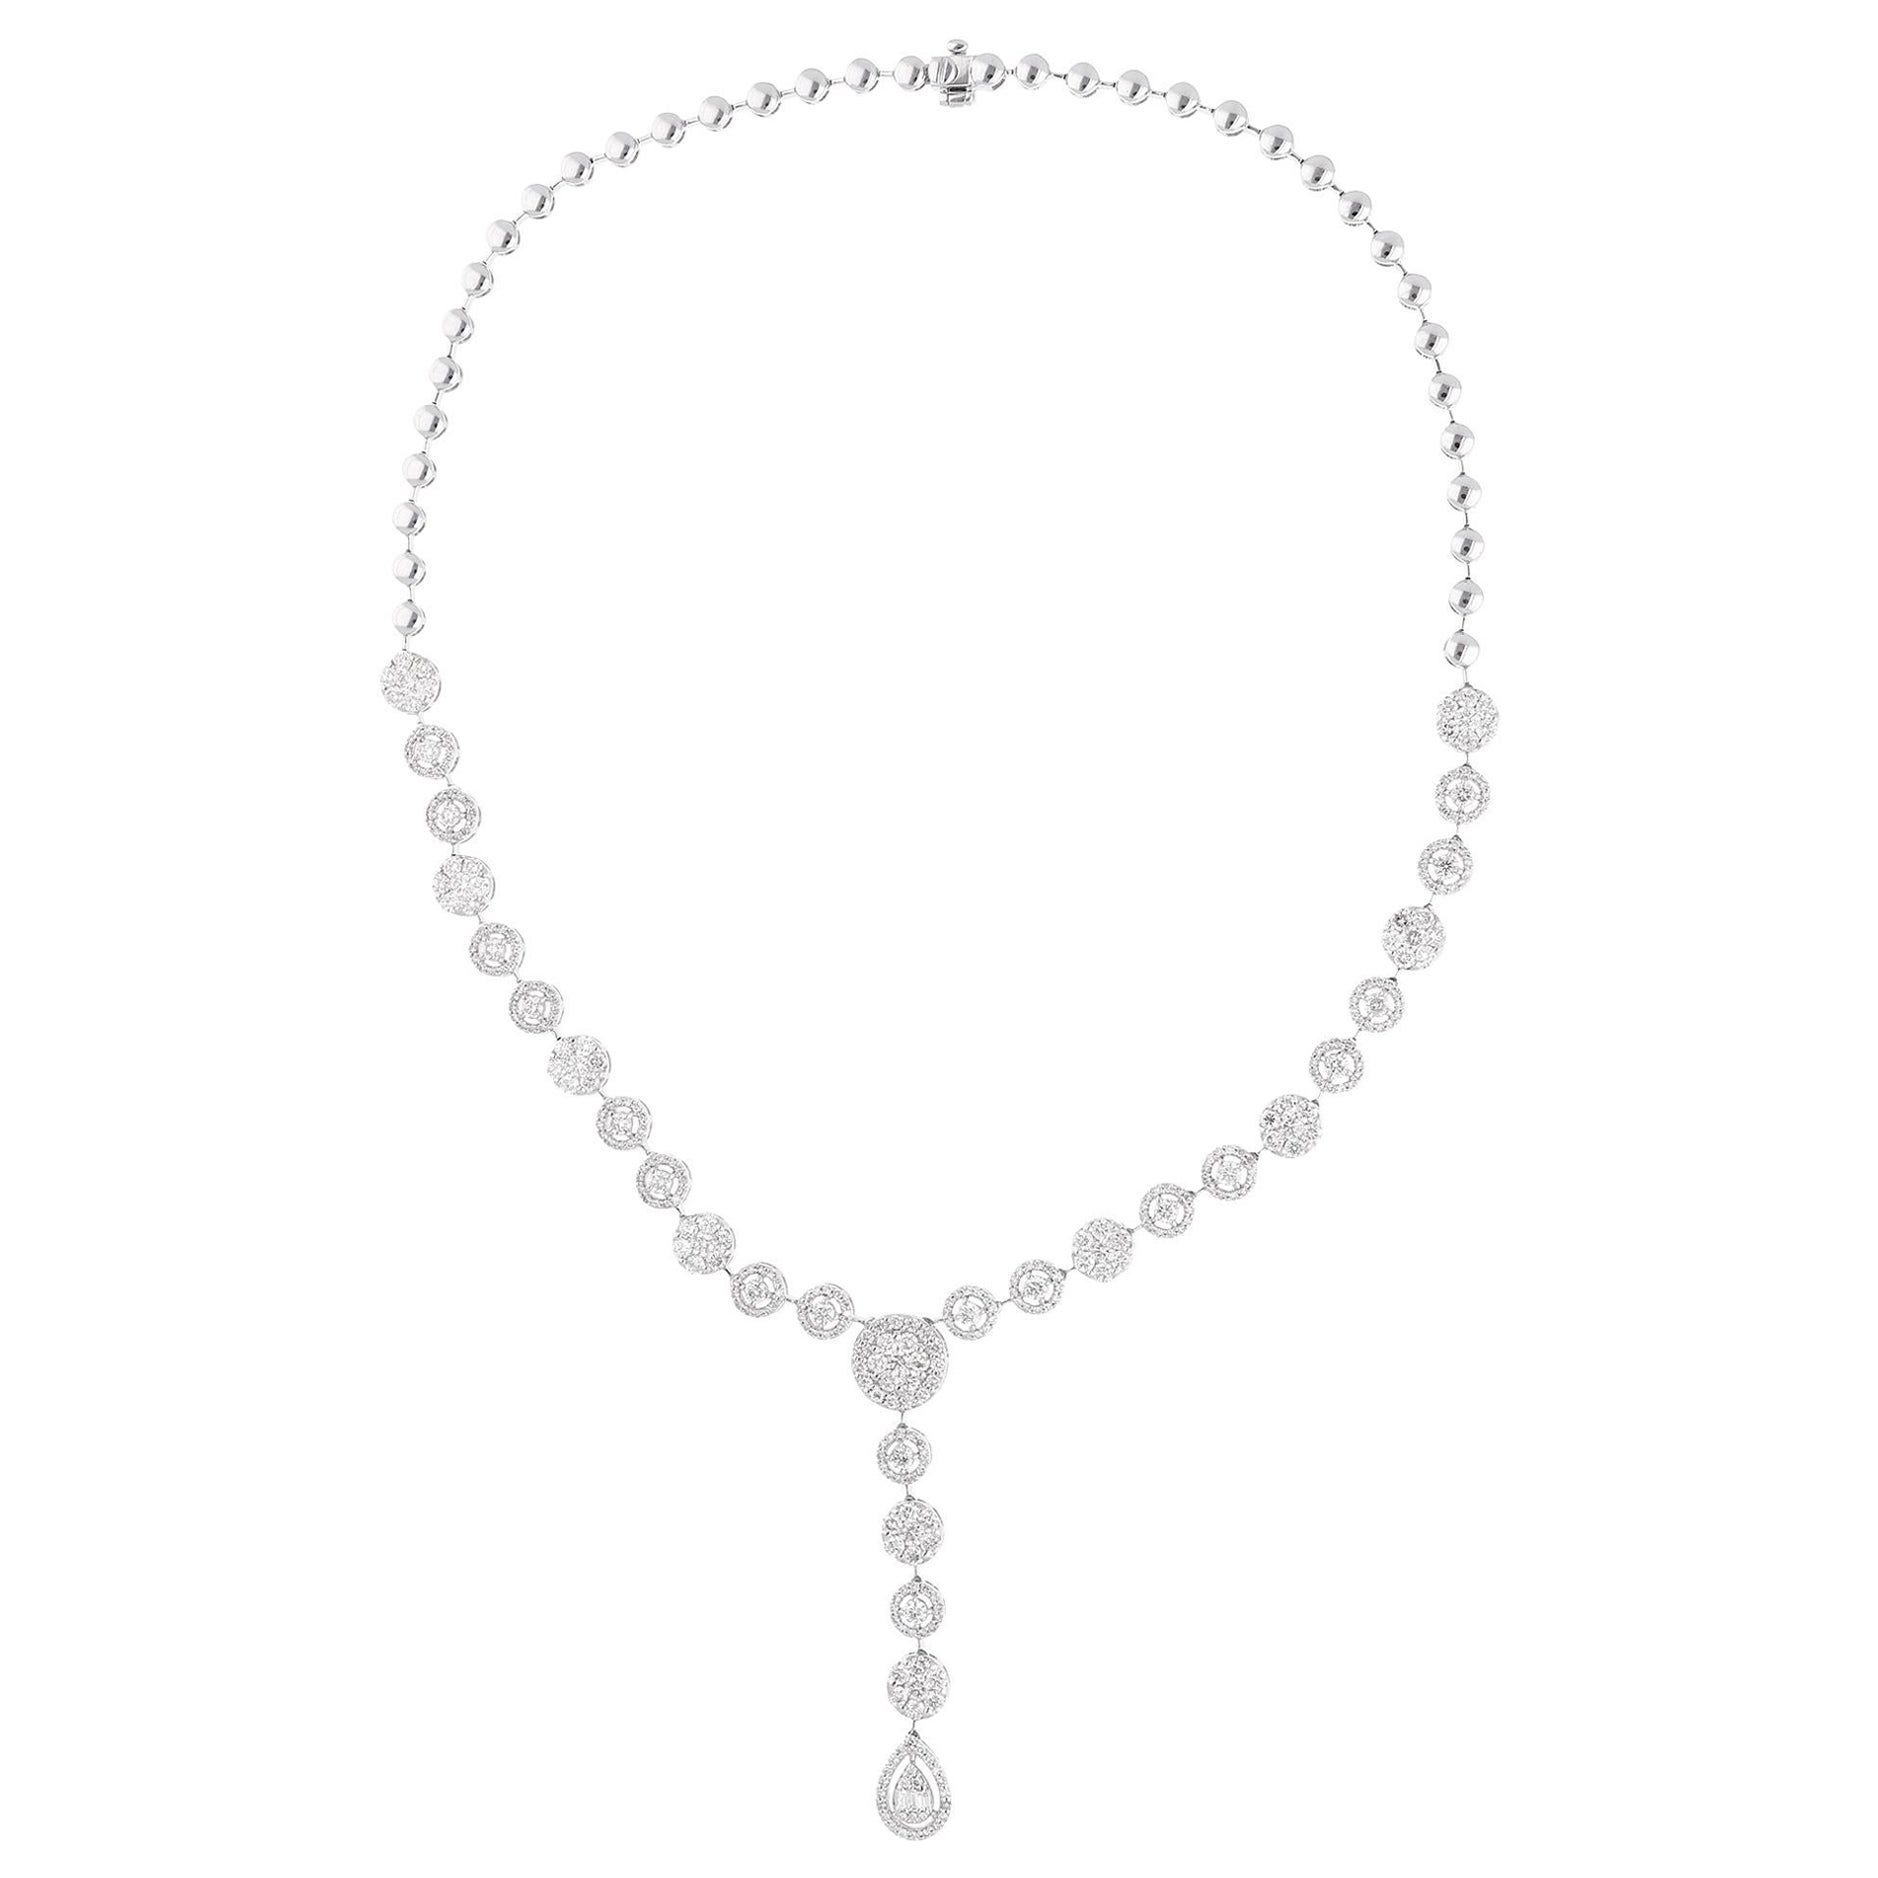 7 Carat SI Clarity HI Color Diamond Lariat Necklace 18 Karat White Gold Jewelry